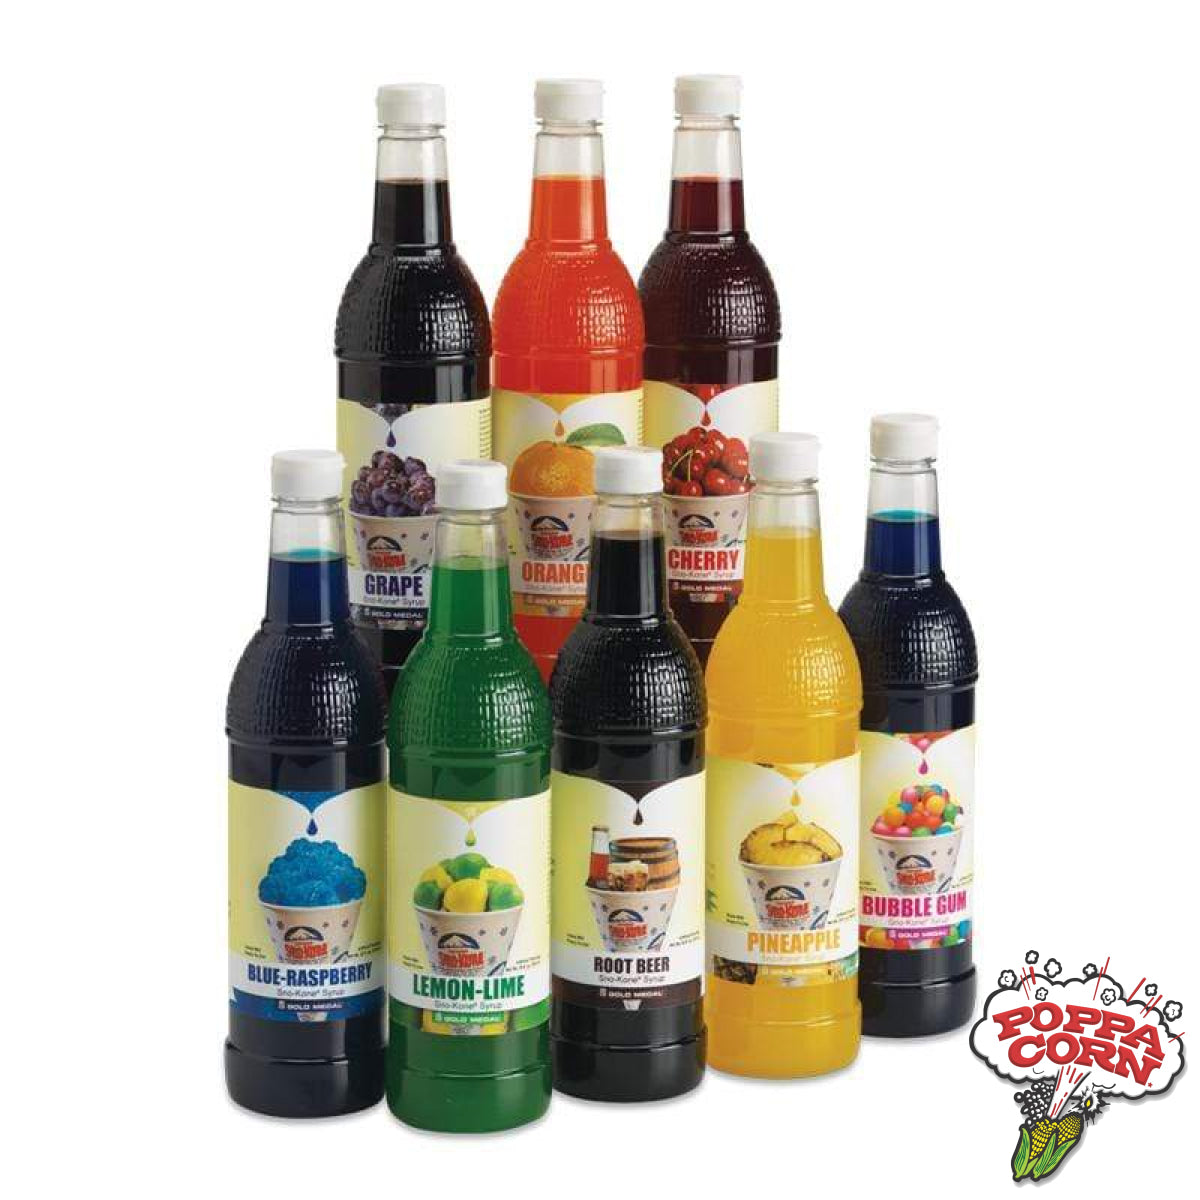 SNK203 - Grape - Sno-Treat Sno-Kone® Flavor - 750ml (25oz) Bottle - Poppa Corn Corp